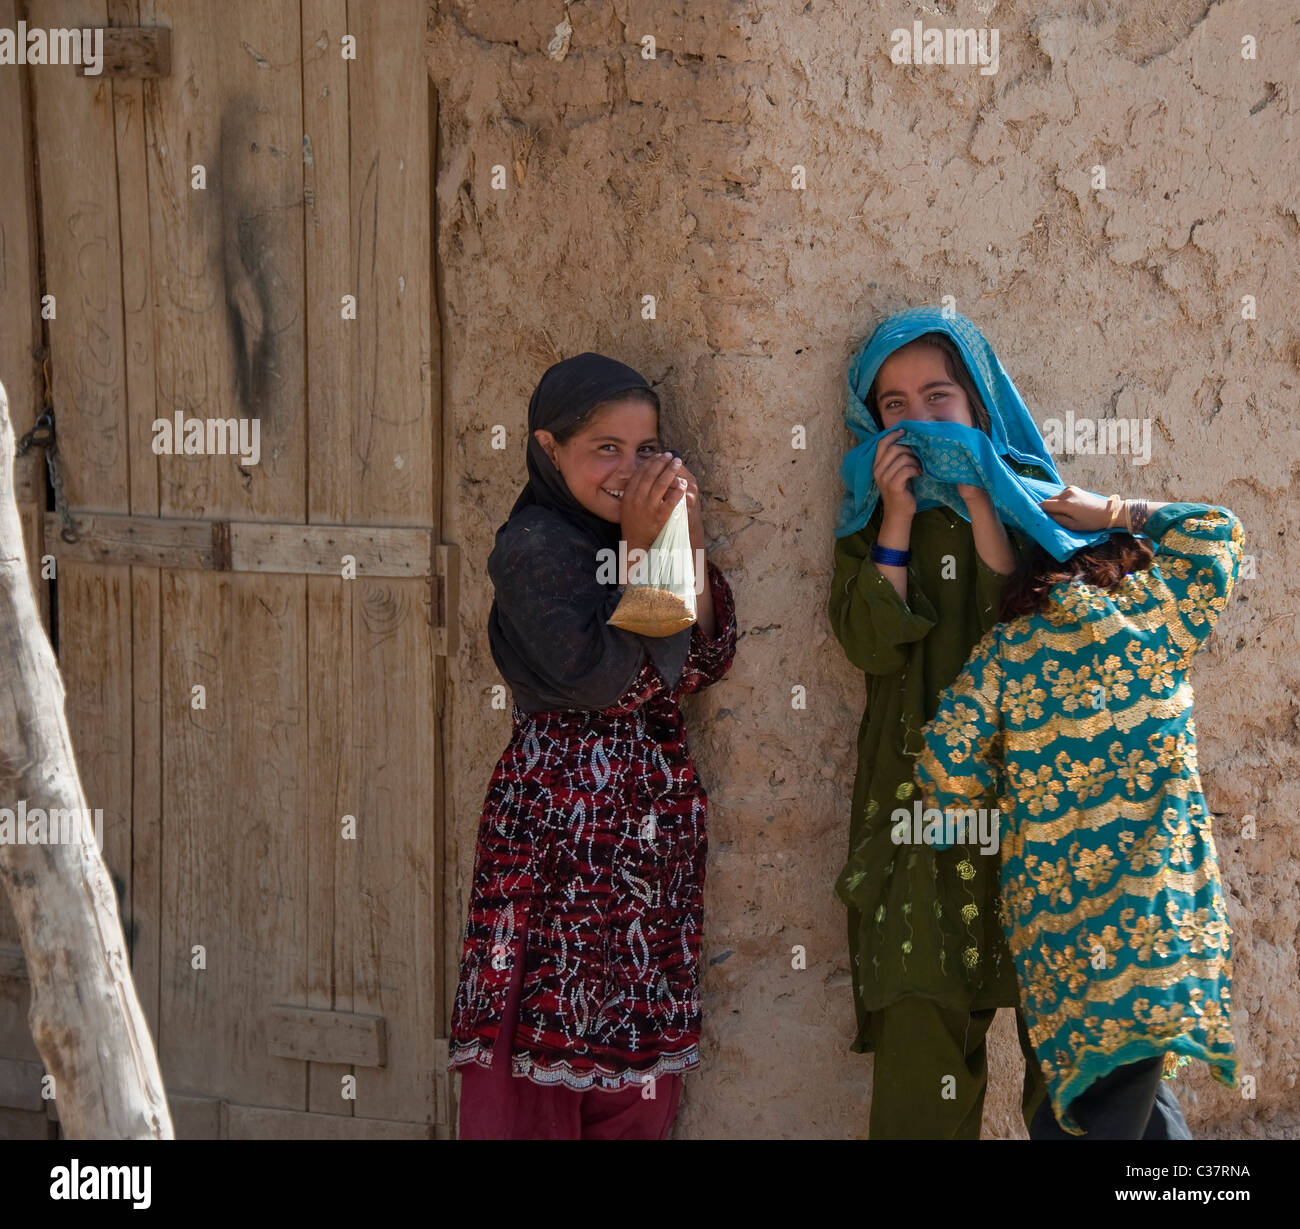 Le giovani ragazze in Helmand, Afghanistan Foto Stock